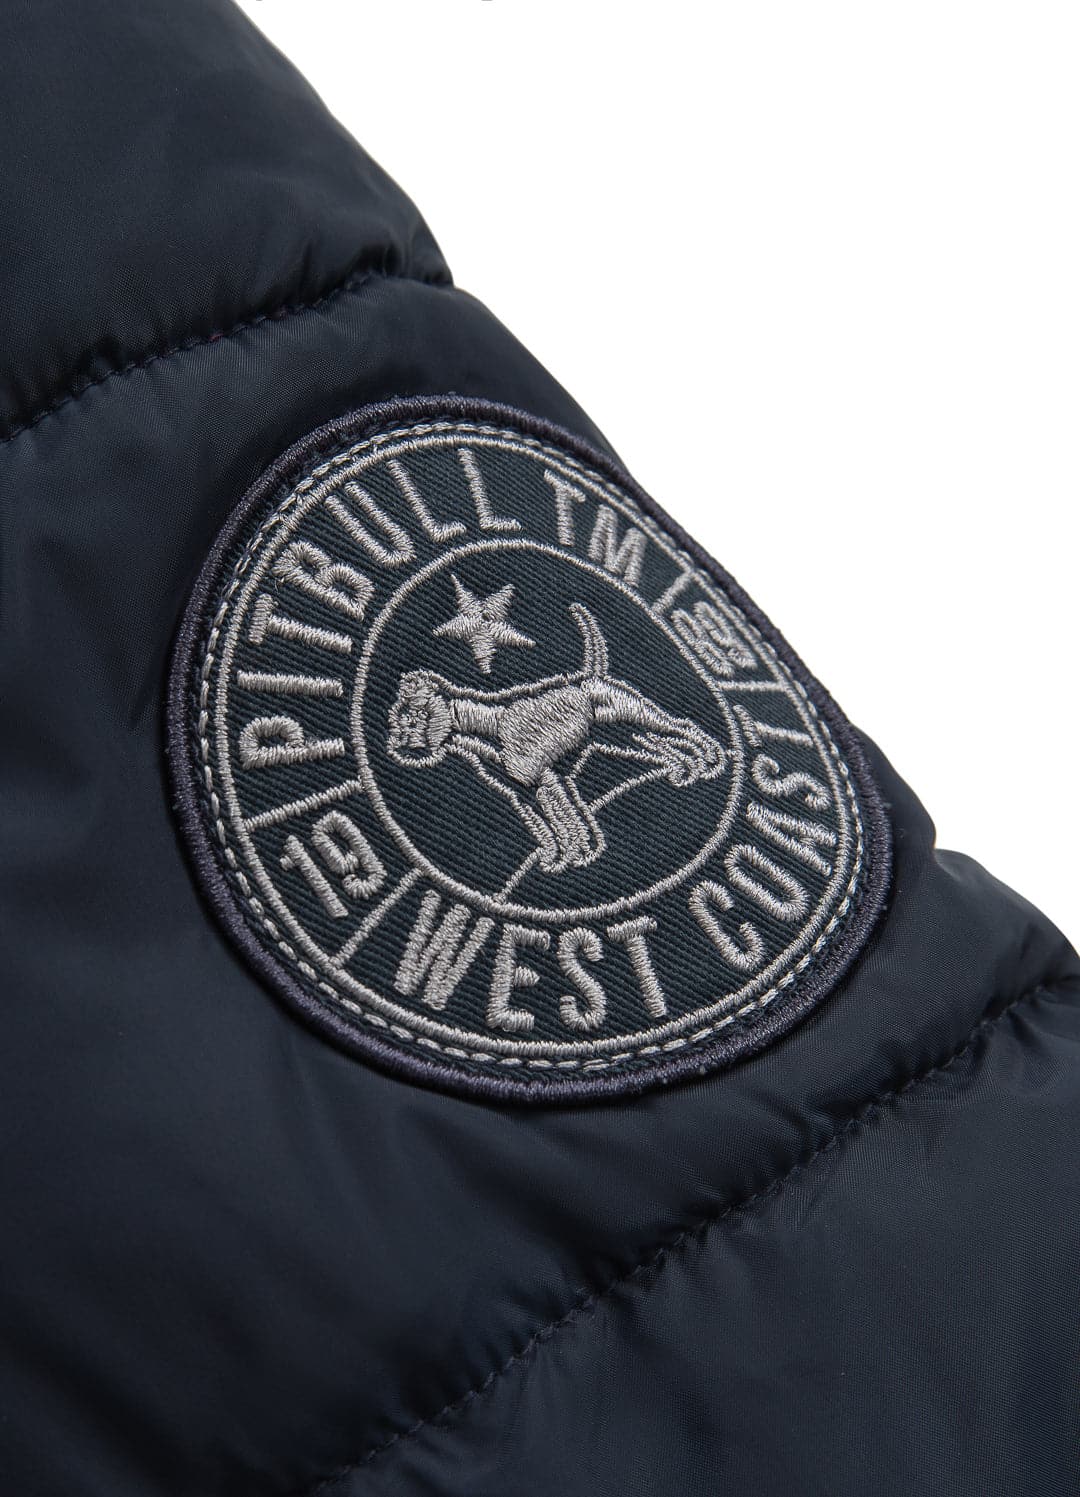 MOBLEY Kids Dark Navy Jacket - Pitbull West Coast International Store 